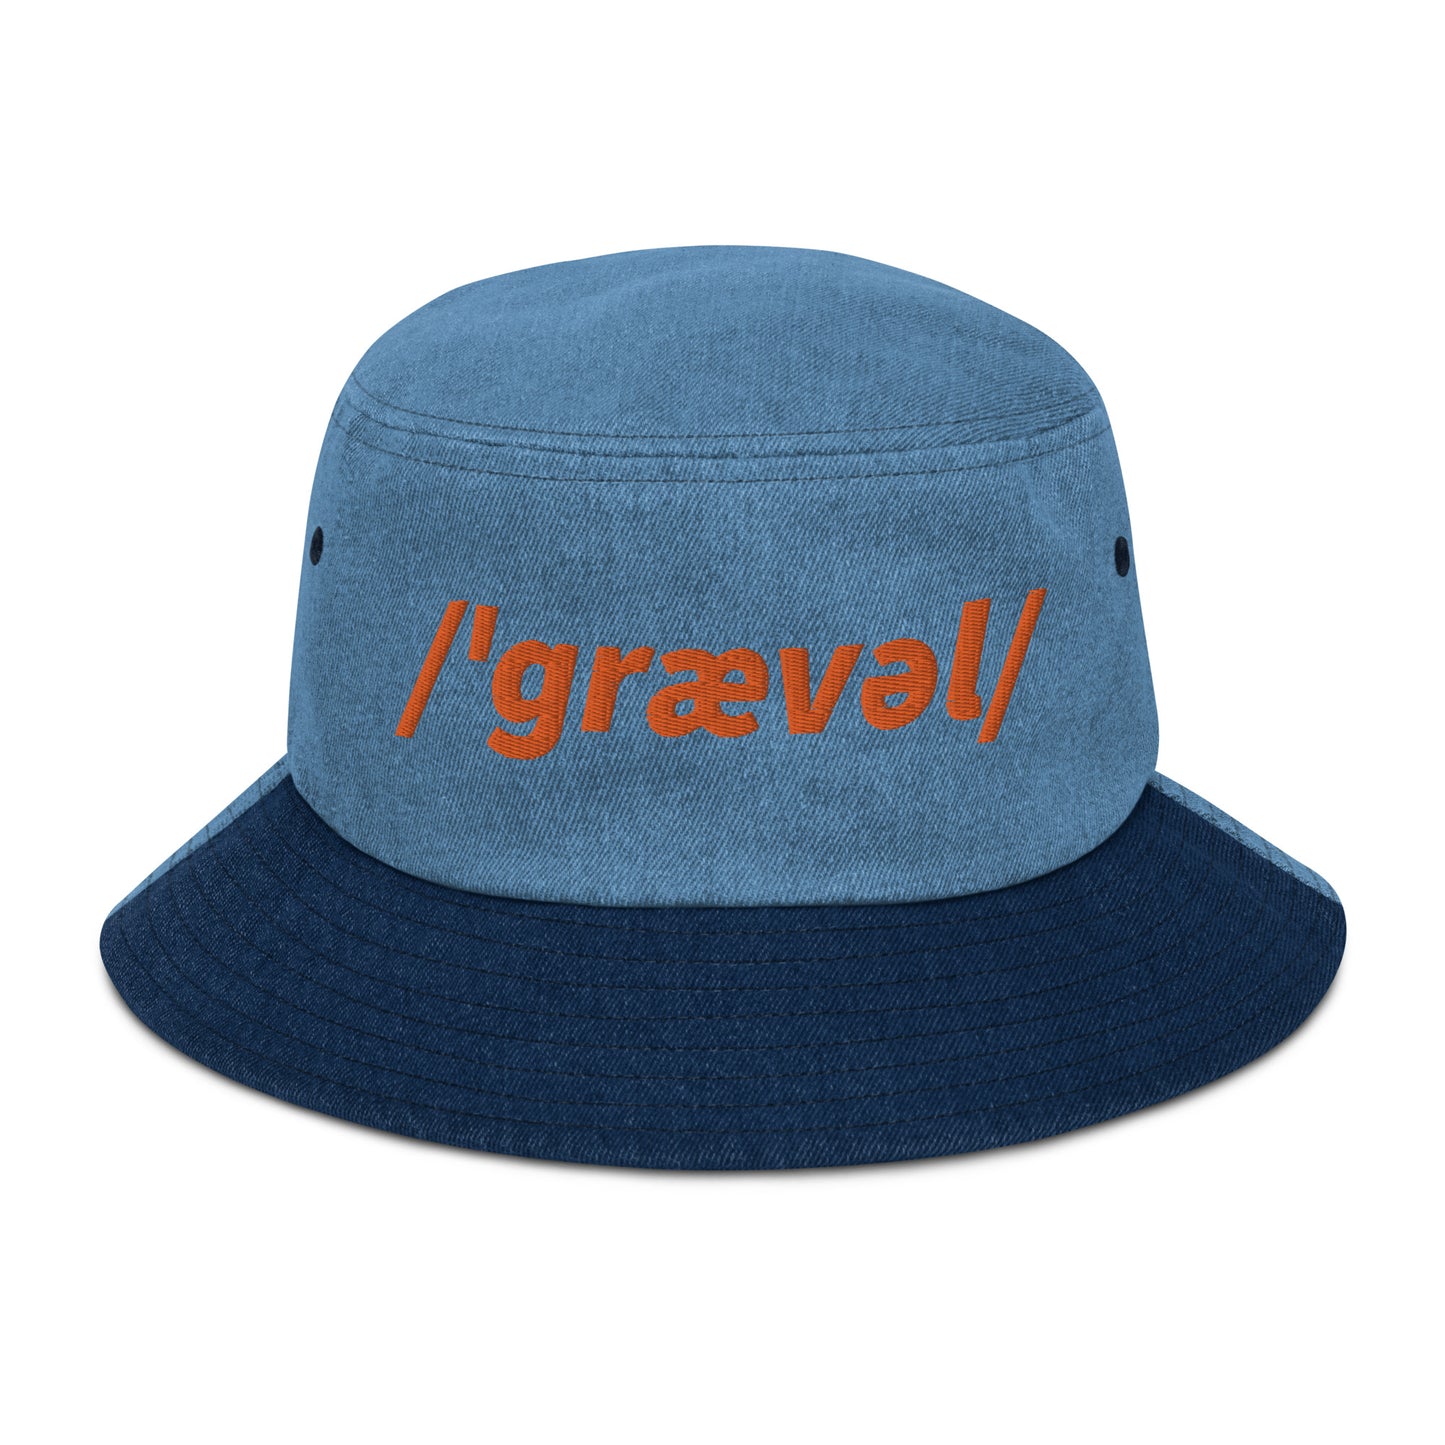 Gravel Embroidered Denim Bucket Hat, Phonetic Spelling, Adult